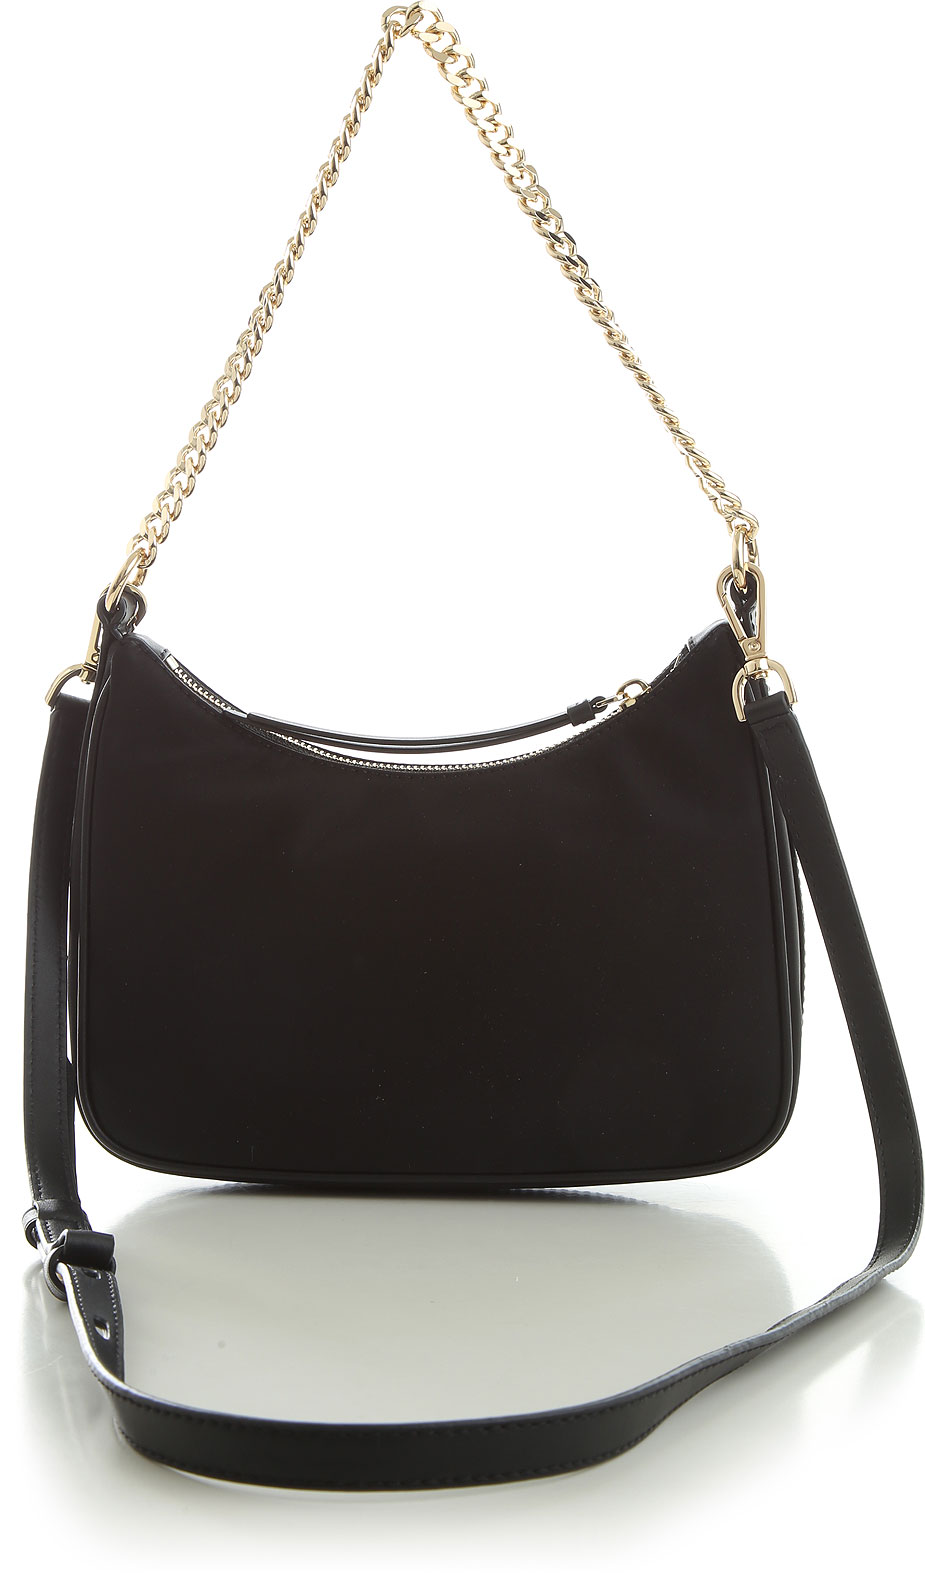 Handbags Michael Kors, Style code: 32f1gt9c8c-001-B959